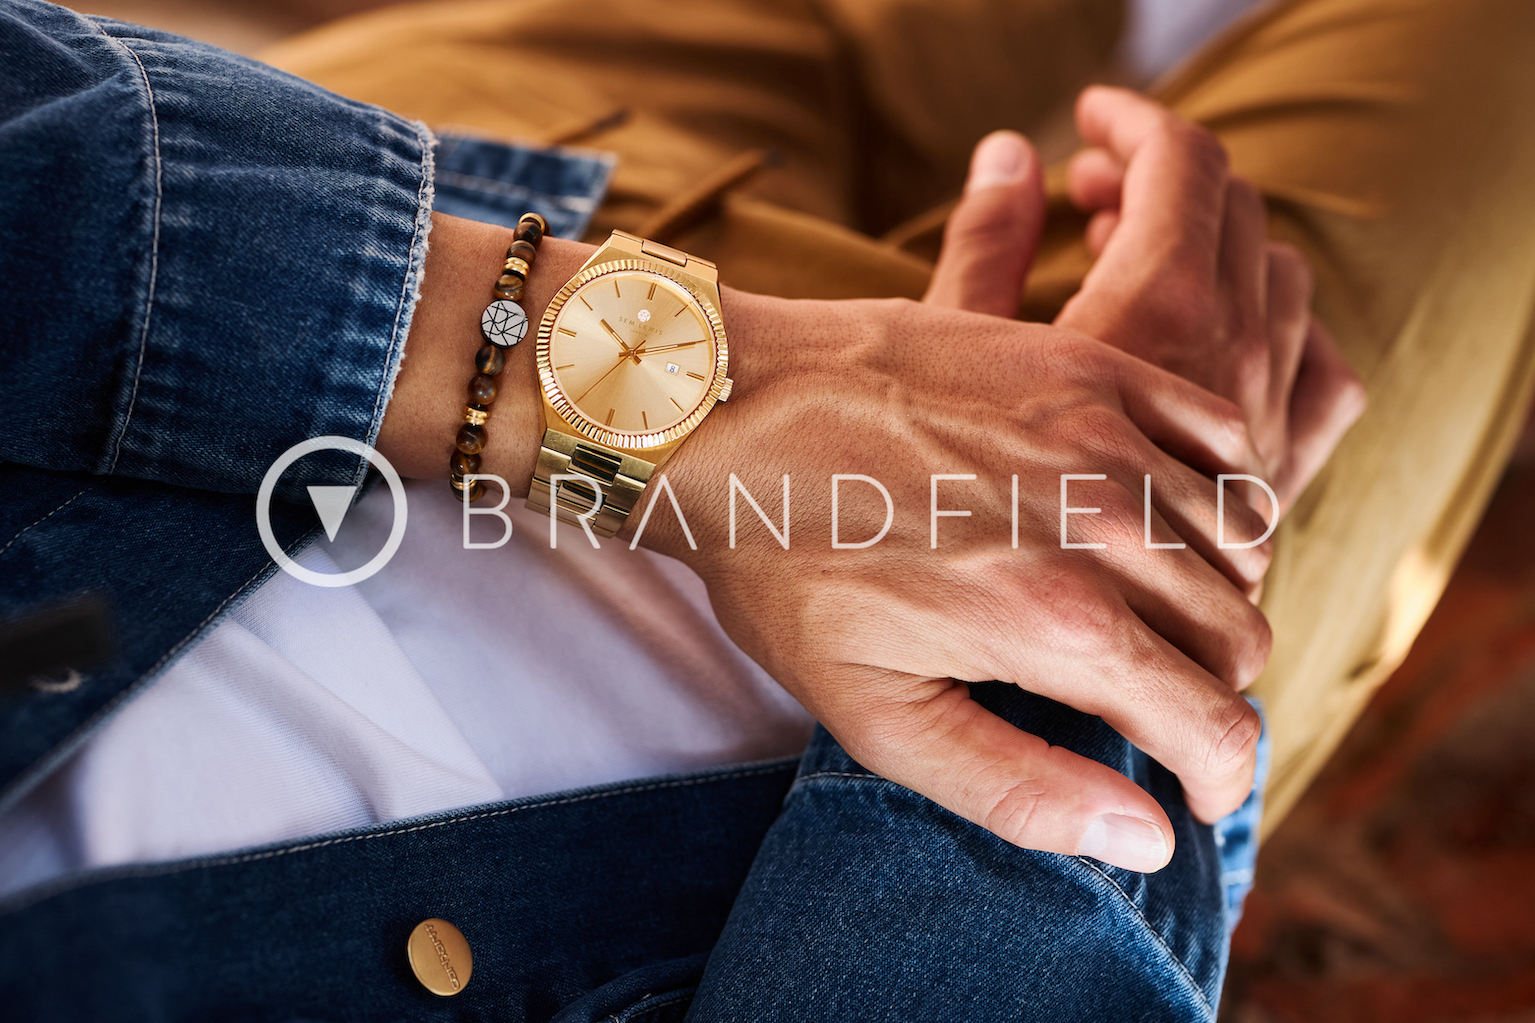 Brandfield Horloges - t.w.v. €10 Enjoyy